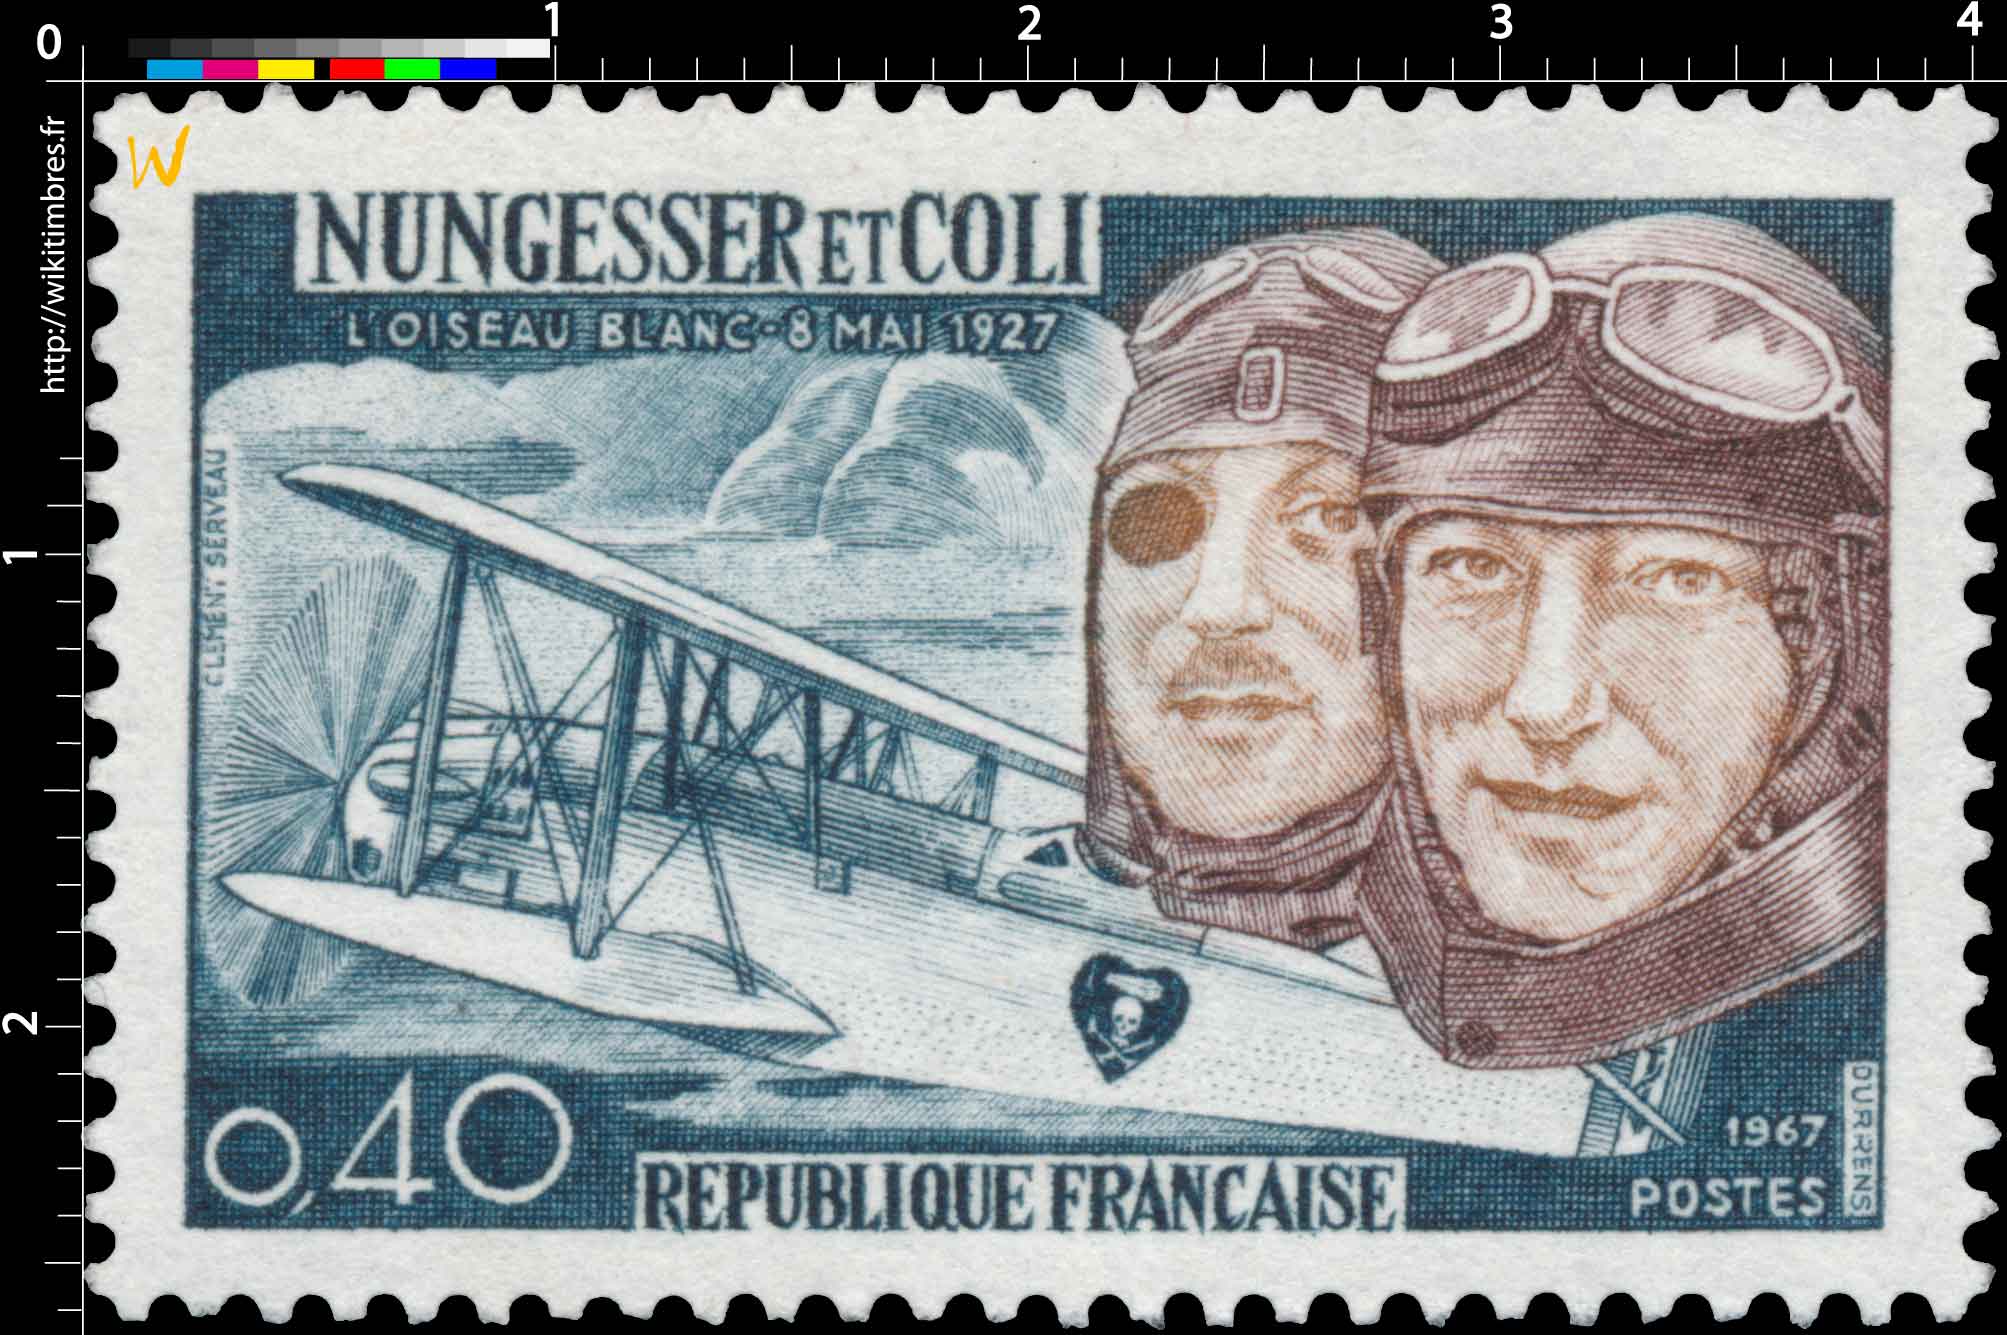 1967 NUNGESSER ET COLI L'OISEAU BLANC 8 MAI 1927